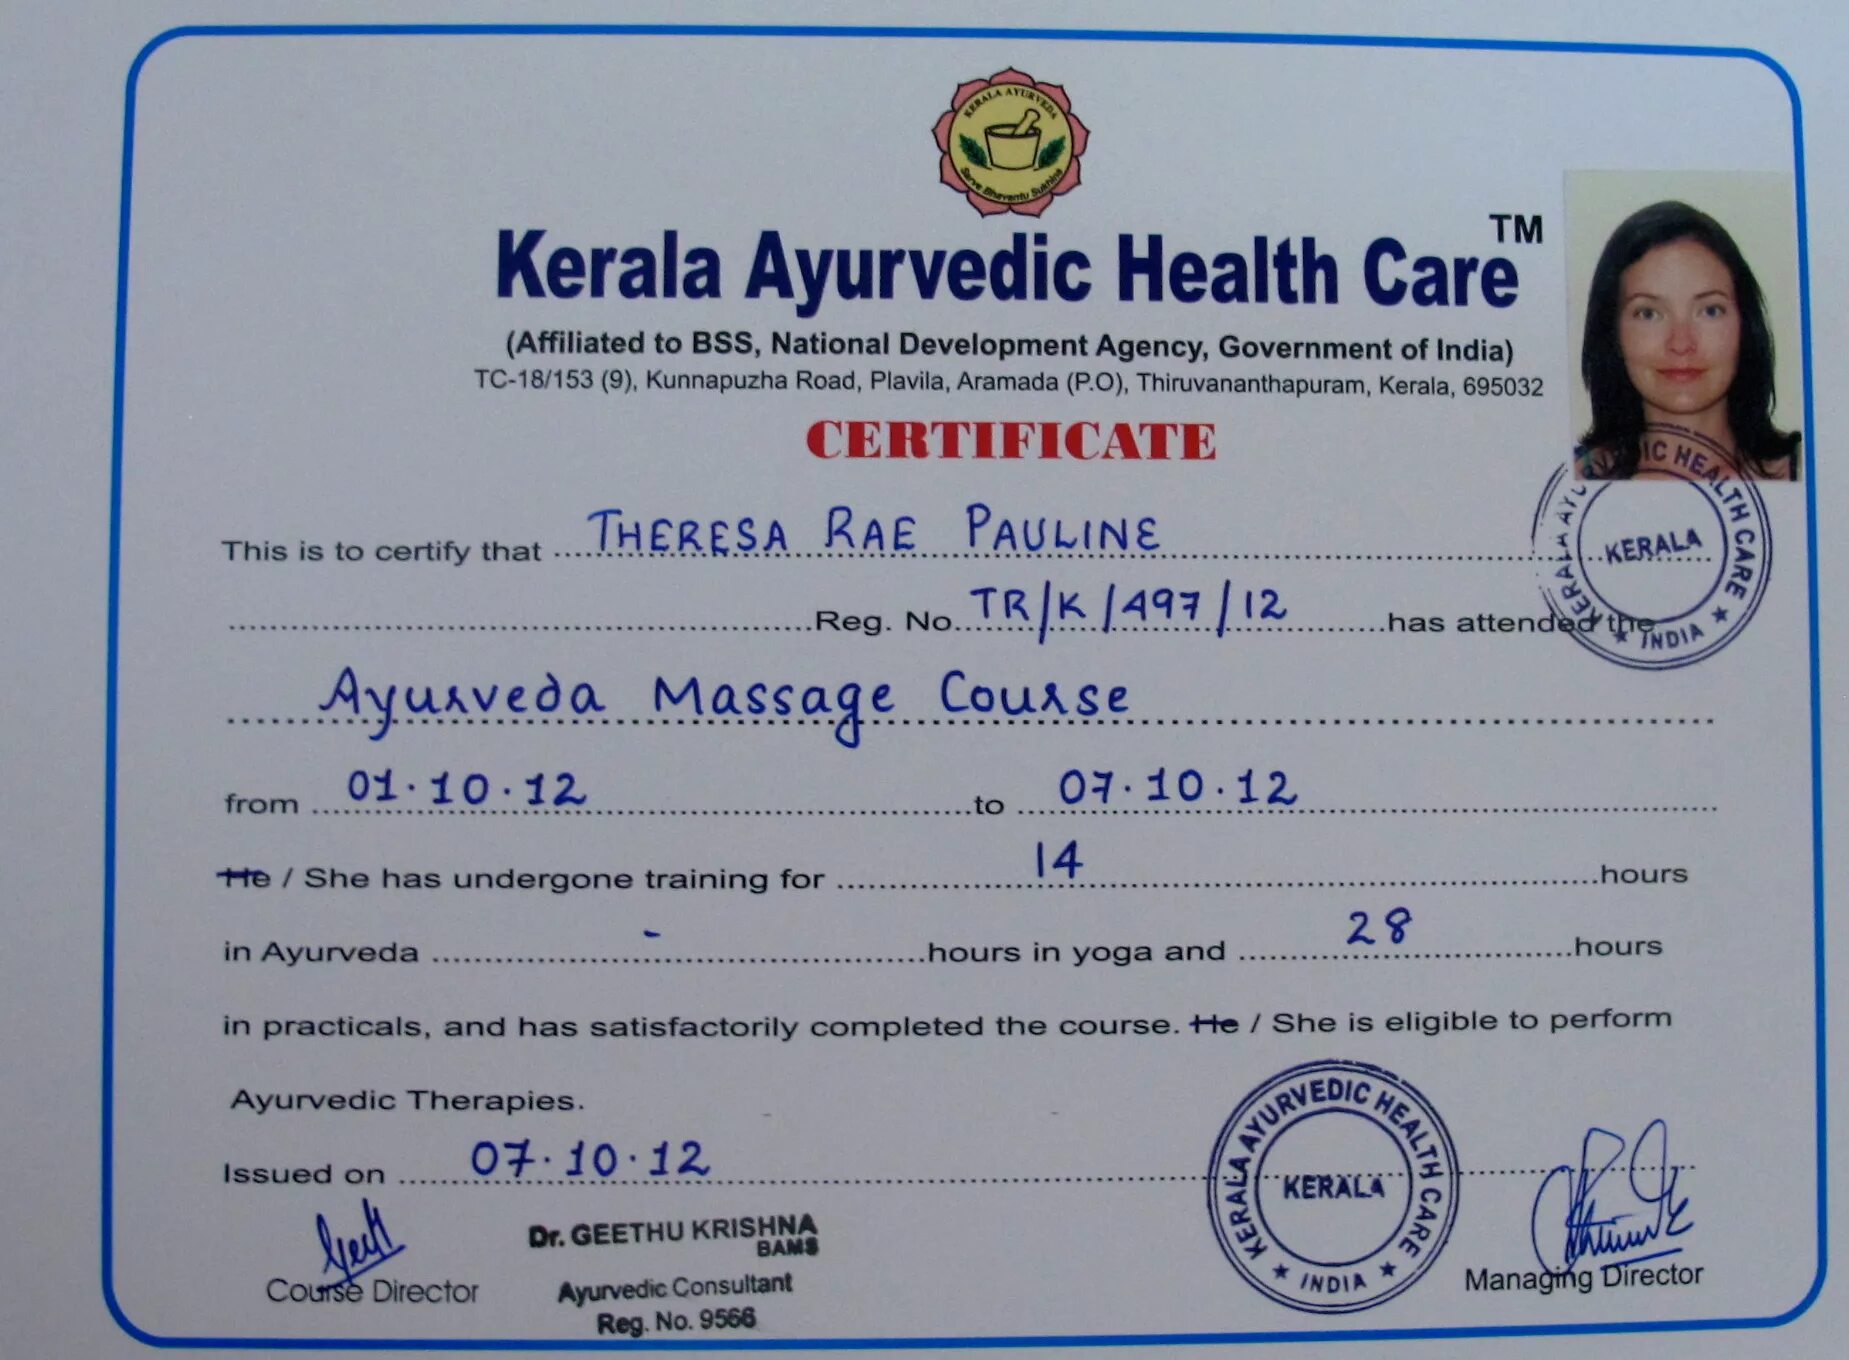 Identity certificate. Medical Certificate. Seafarer Medical Certificate. Certificates for Medical students. Doctor's Certificate.